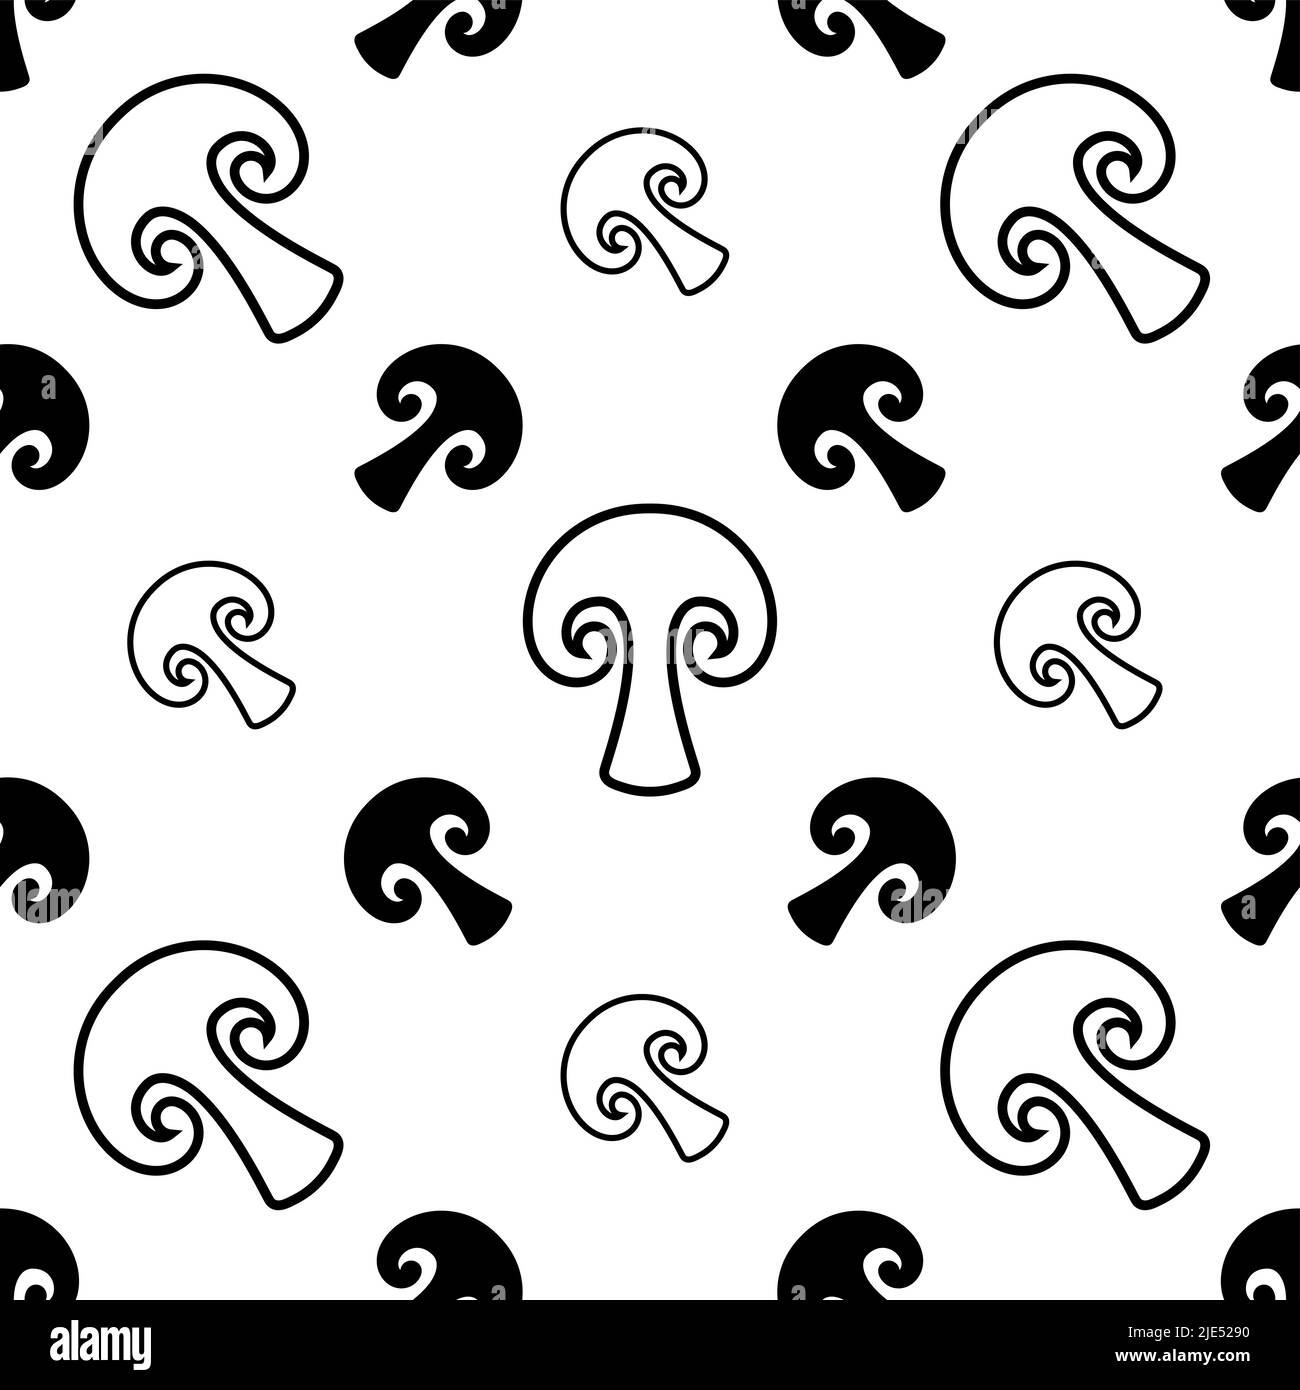 Mushroom Icon Seamless Pattern, Mushroom With Cap And Stipe Vector Art Illustration Stock Vector